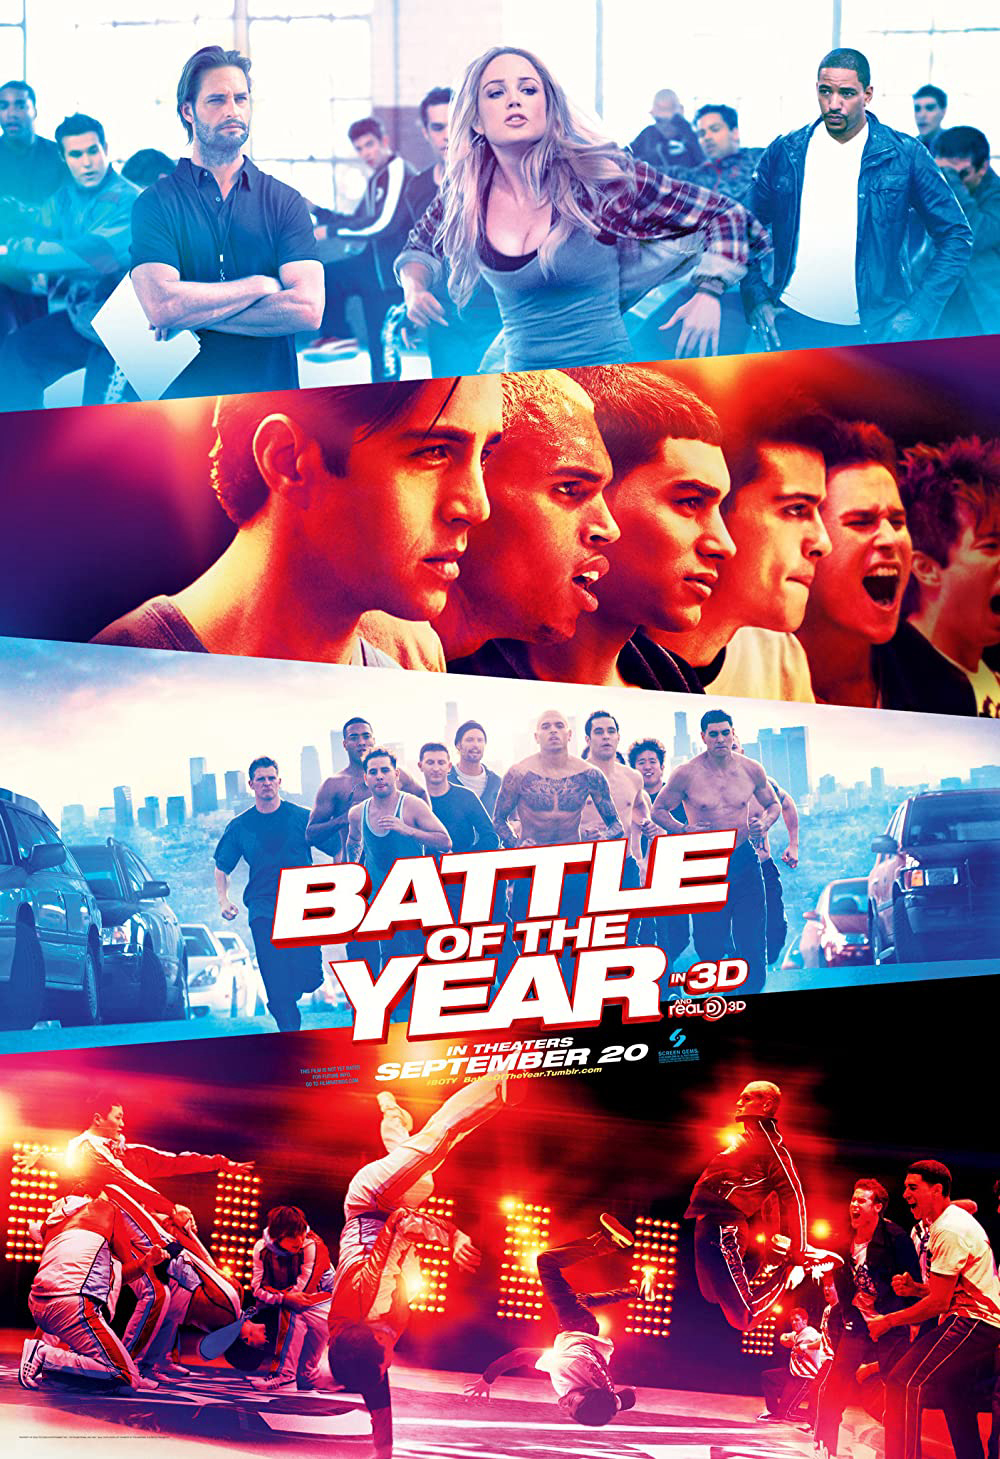 Xem Phim Đấu Trường Breakdance (Battle of the Year)